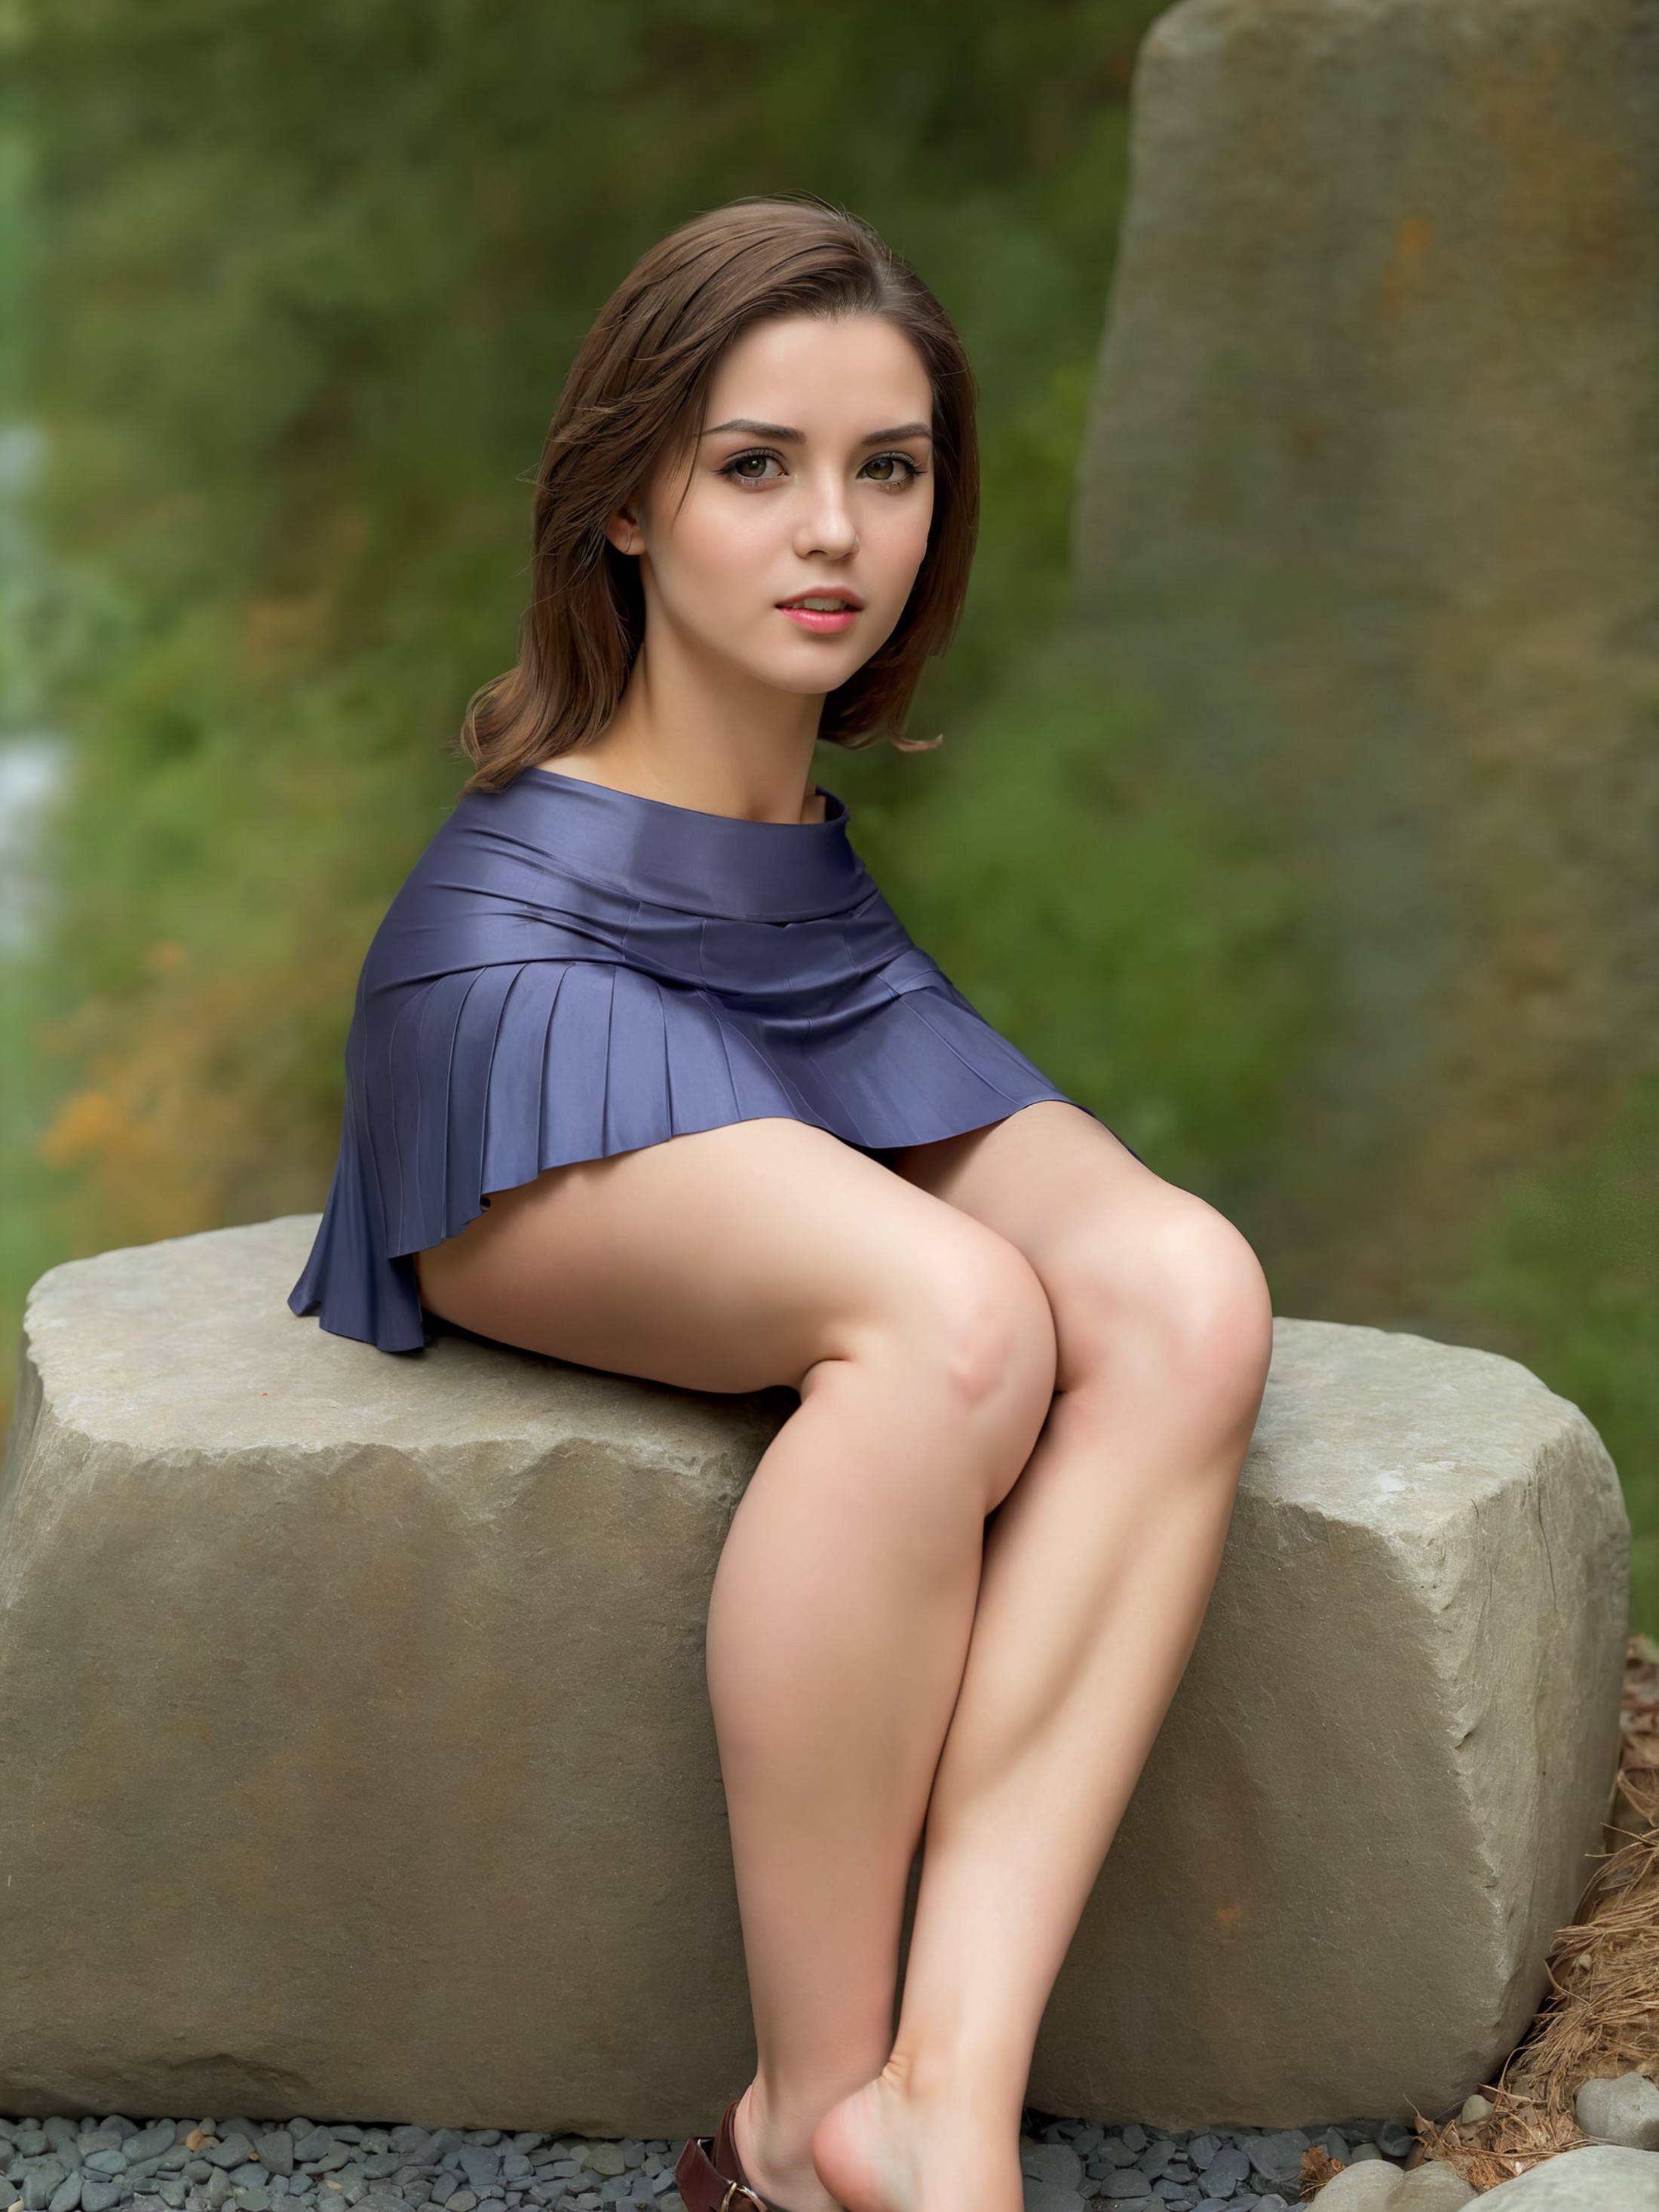 <lora:truncated_adam-cosine_16x8-4x1-000003:0.9>
a trunc4t3d woman 
wearing a skirt
sitting on a stone outdoors
, 8k, high...